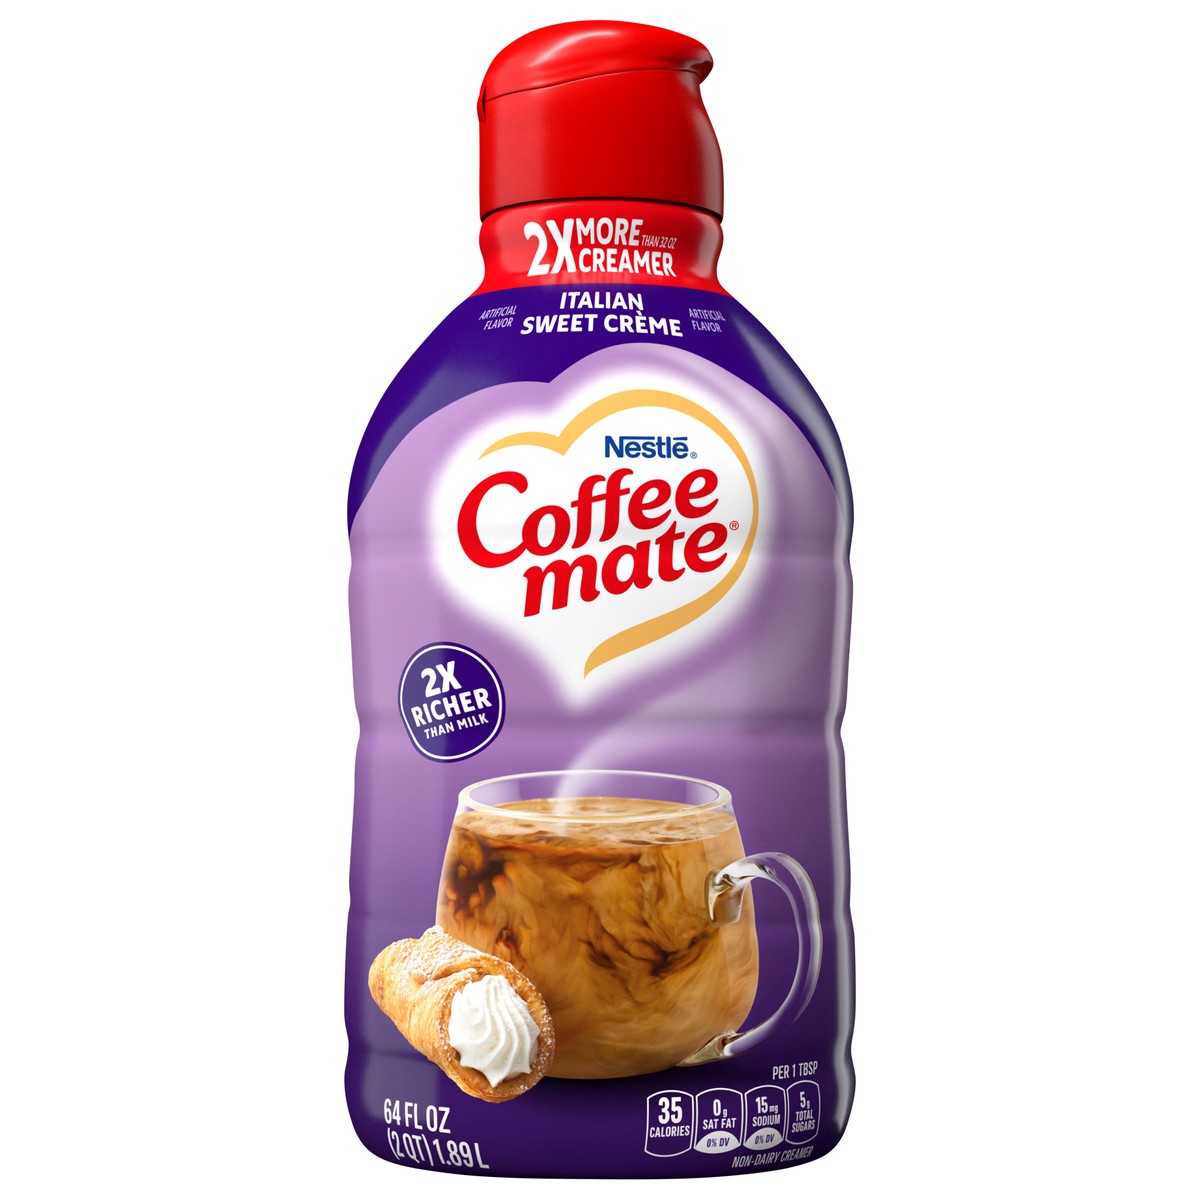 slide 1 of 94, Coffee mate Italian Sweet Creme Liquid Coffee Creamer, 64 oz